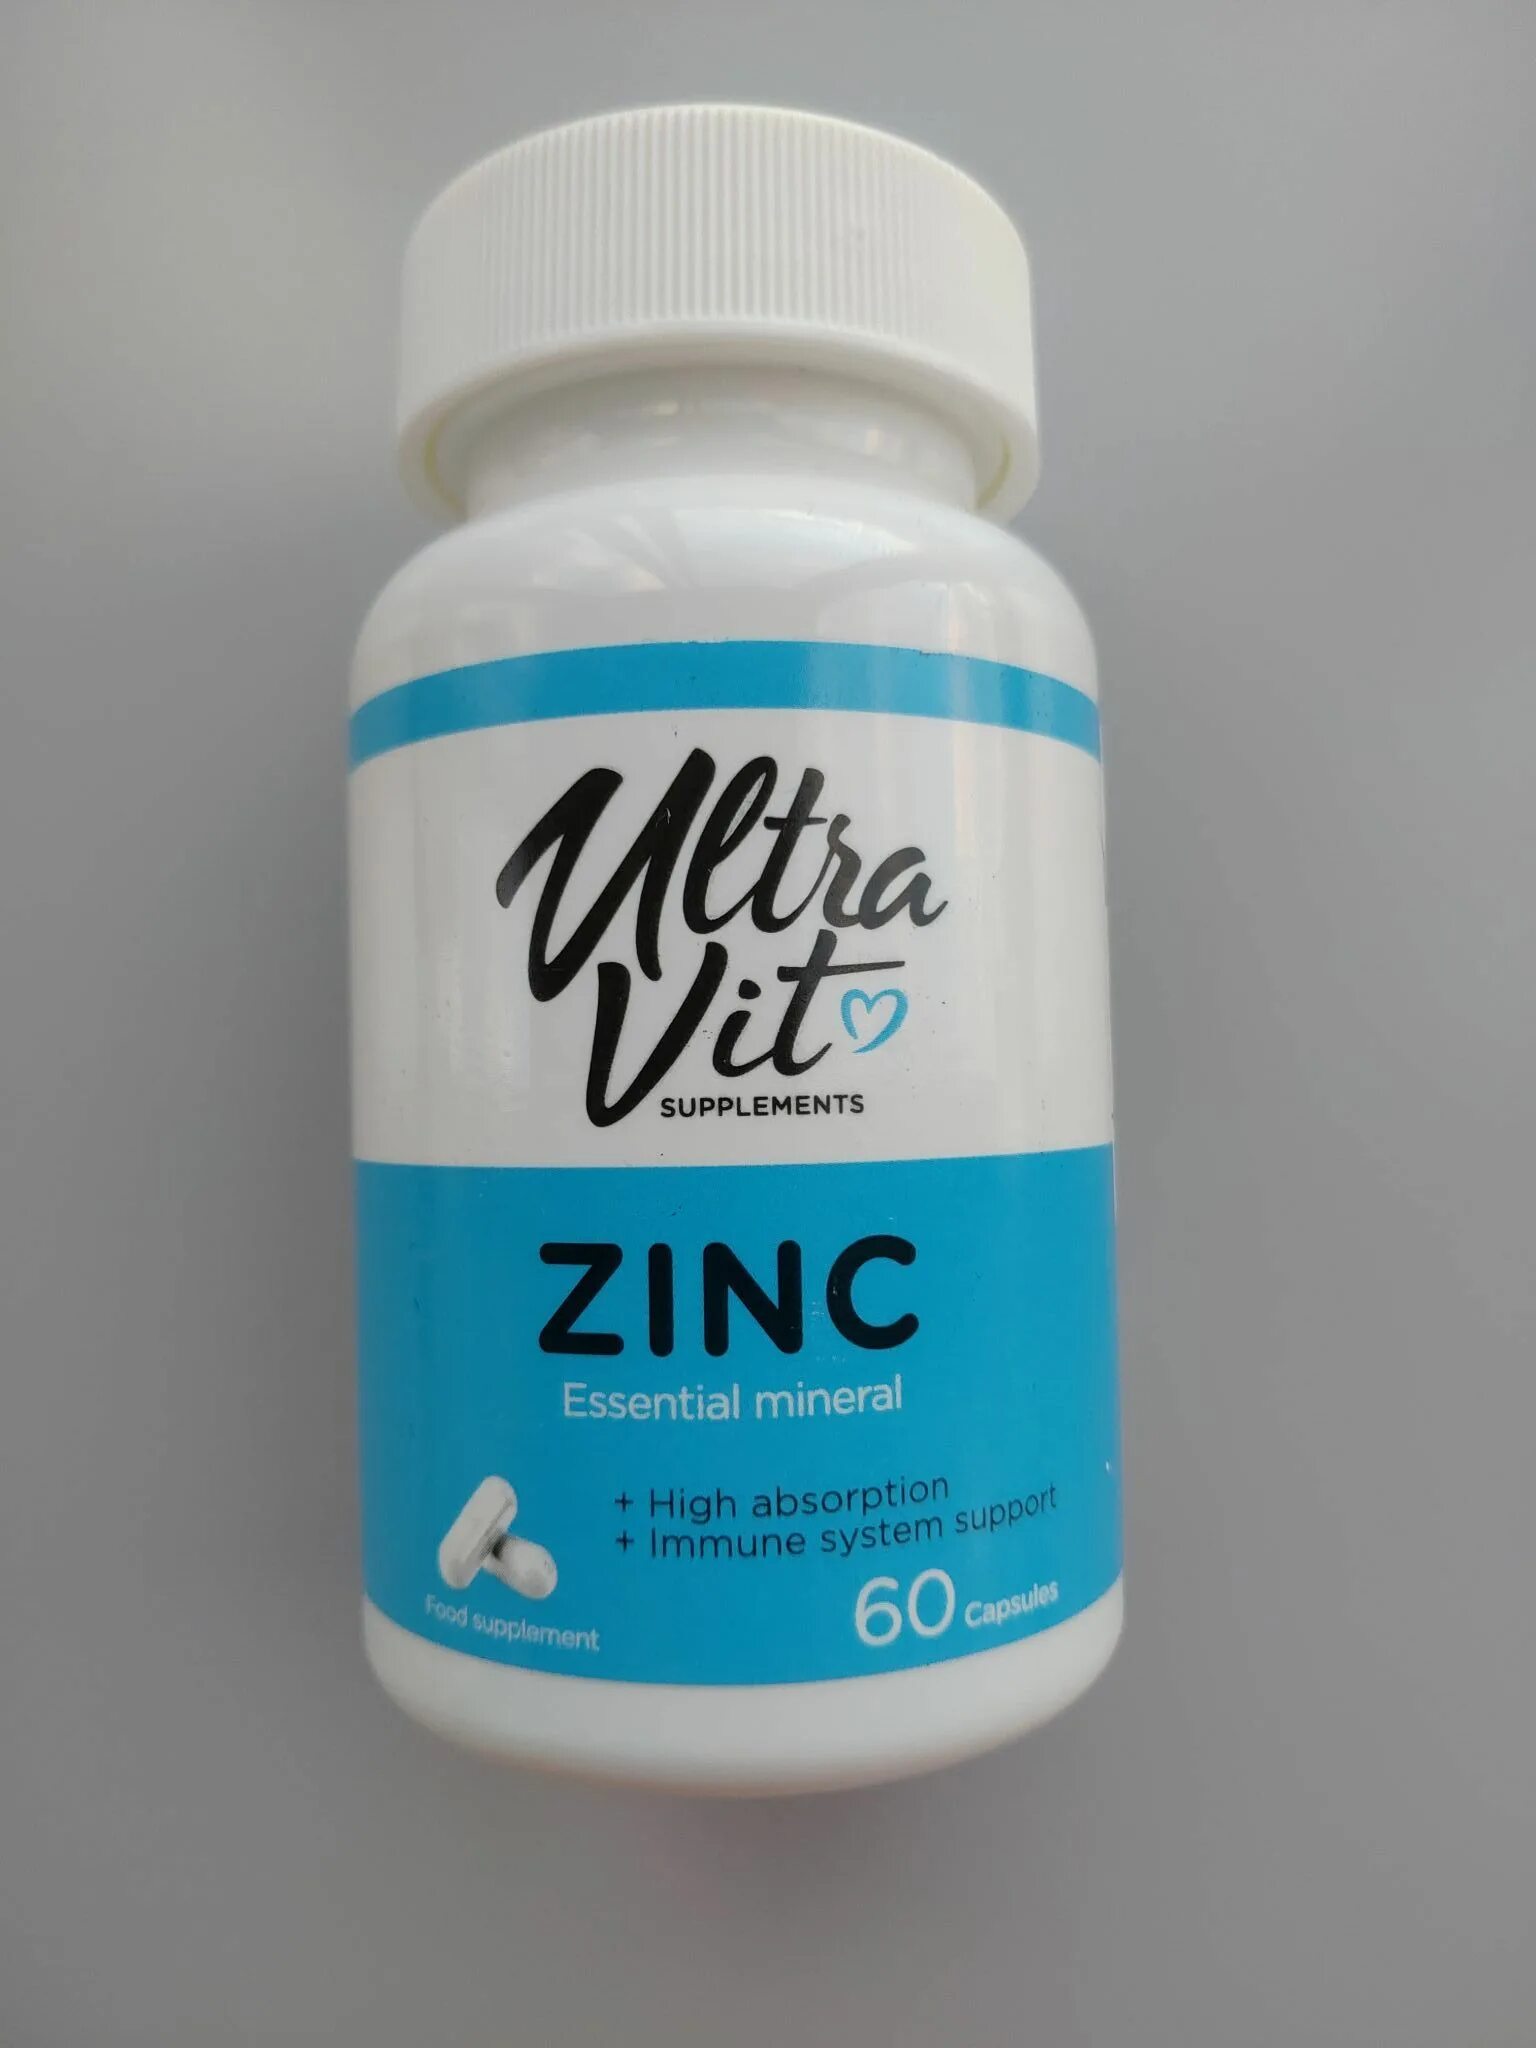 Ultravit vitamin. Ультравит / цинк / 60 капс. Ultravit цинк / (60 кап). Цинк chikalab Zinc 60 капс. Ultravit Supplements витамин д3 2000lu.